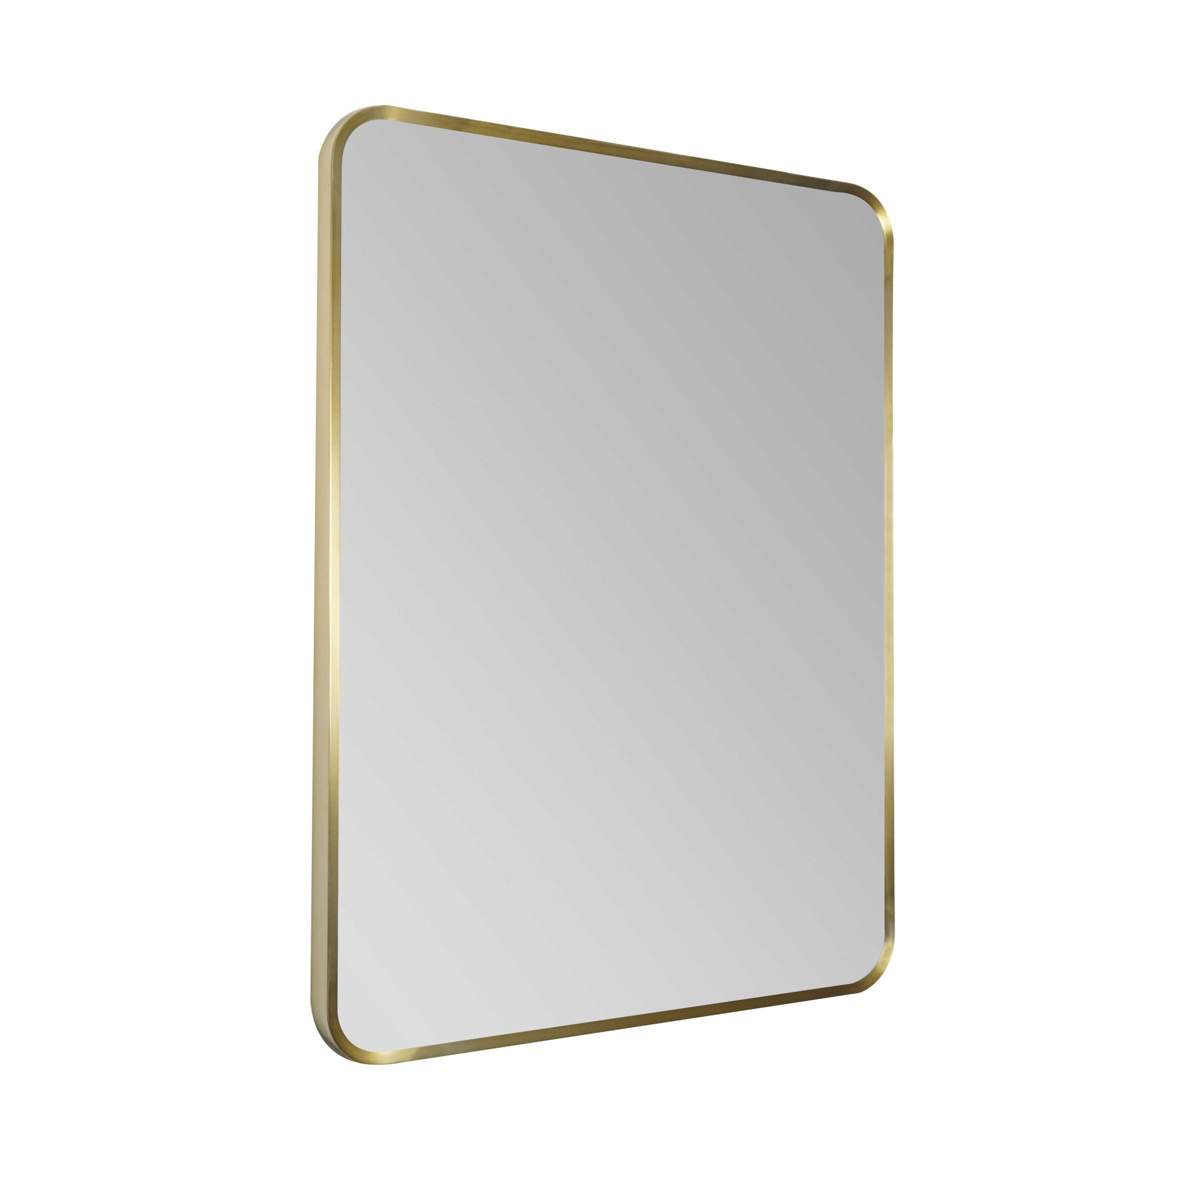 JTP Hix Brushed Brass Mirror without Light (33M68WLBBR)